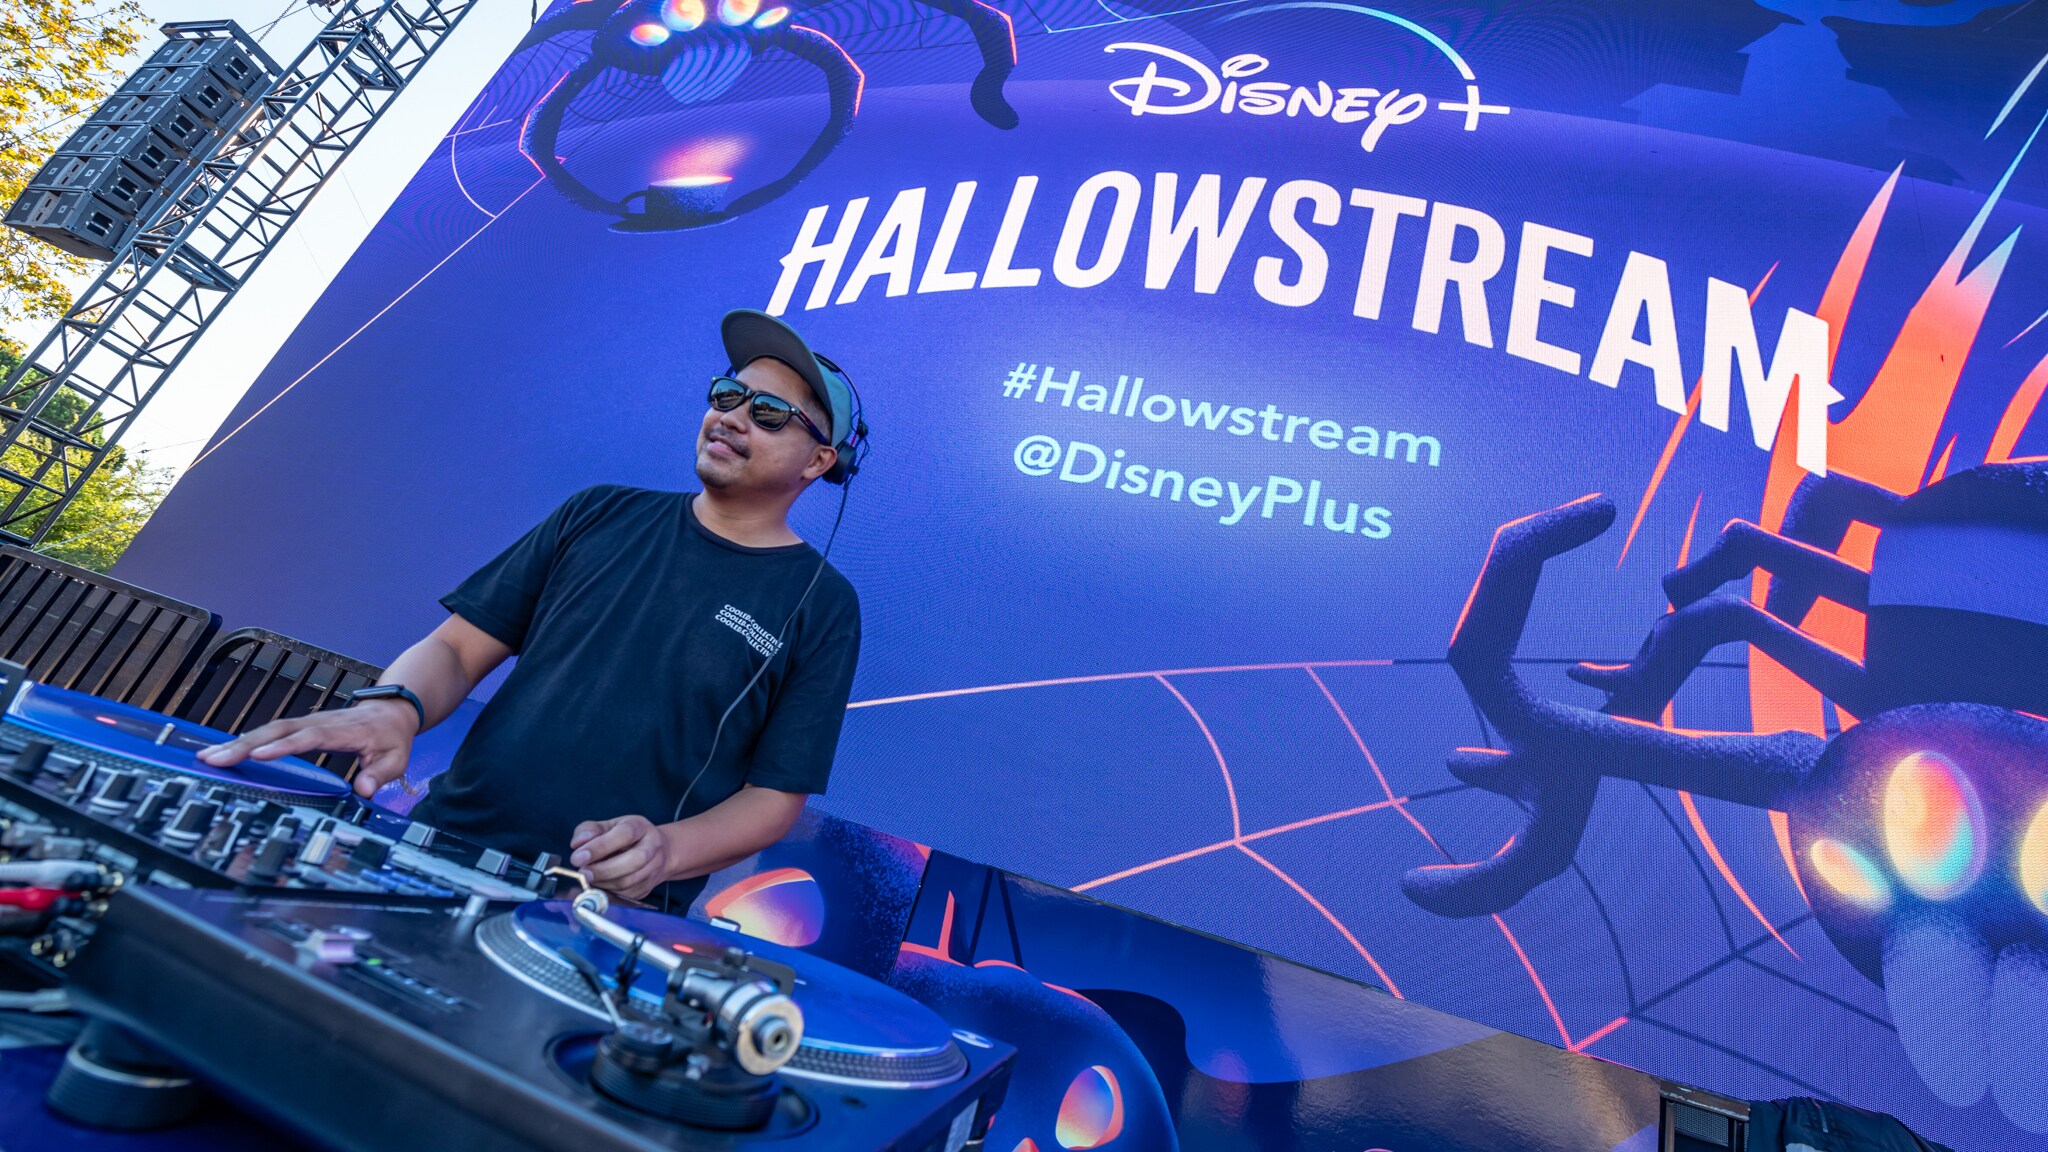 Disney+ Hallowstream Drive-In (October 7-13, 2021, Culver City, California)